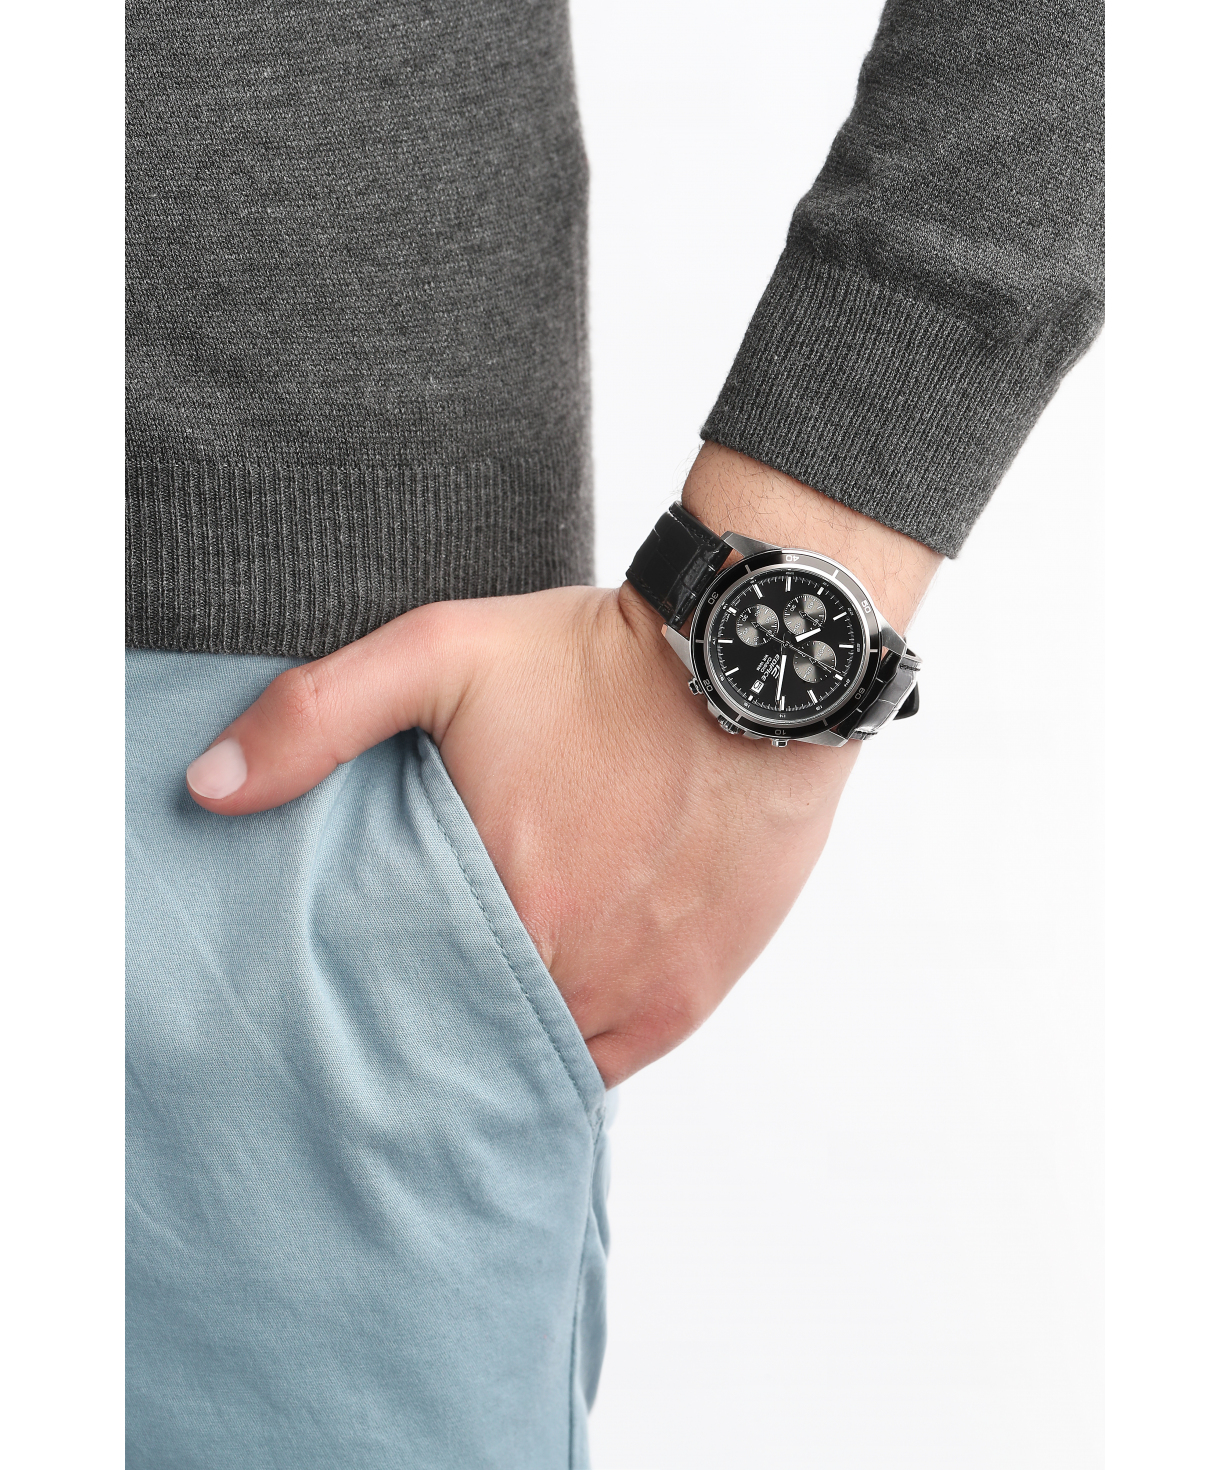 Ժամացույց  «Casio» ձեռքի  EFR-526L-1AVUDF